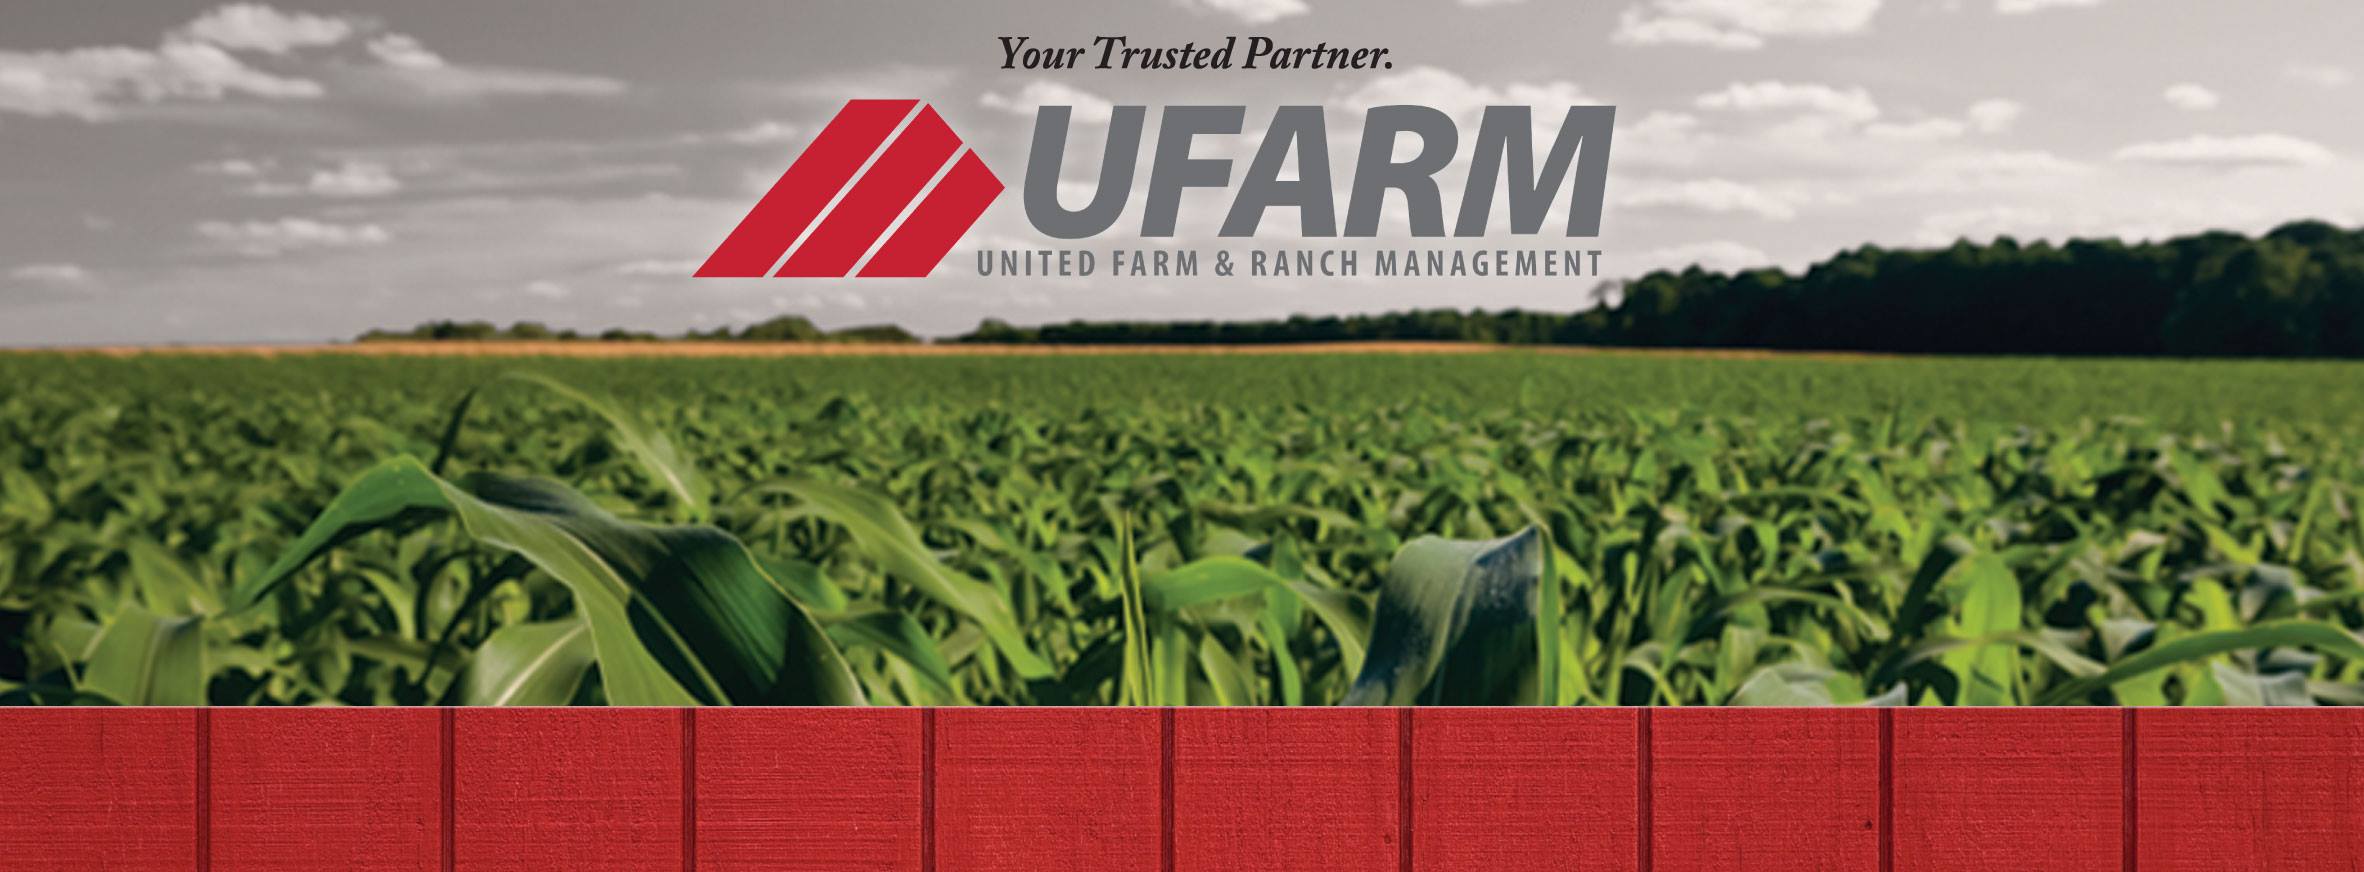 United Farm & Ranch Management (UFARM) - Lincoln, NE